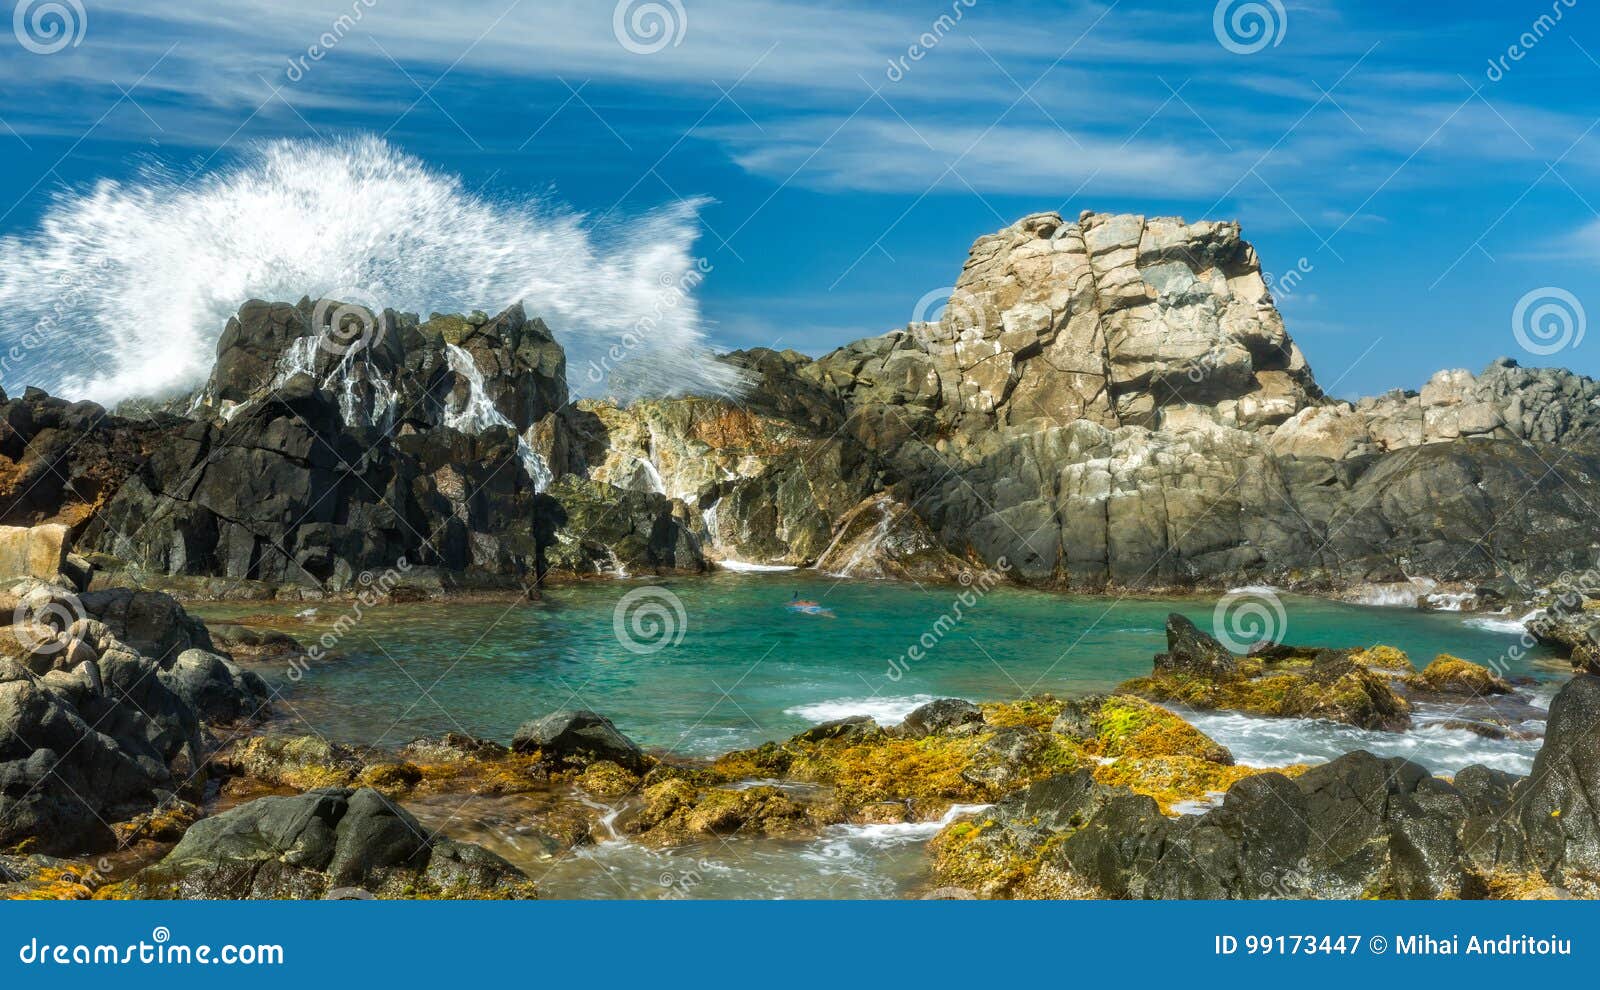 wave splashes against rocks in aruba